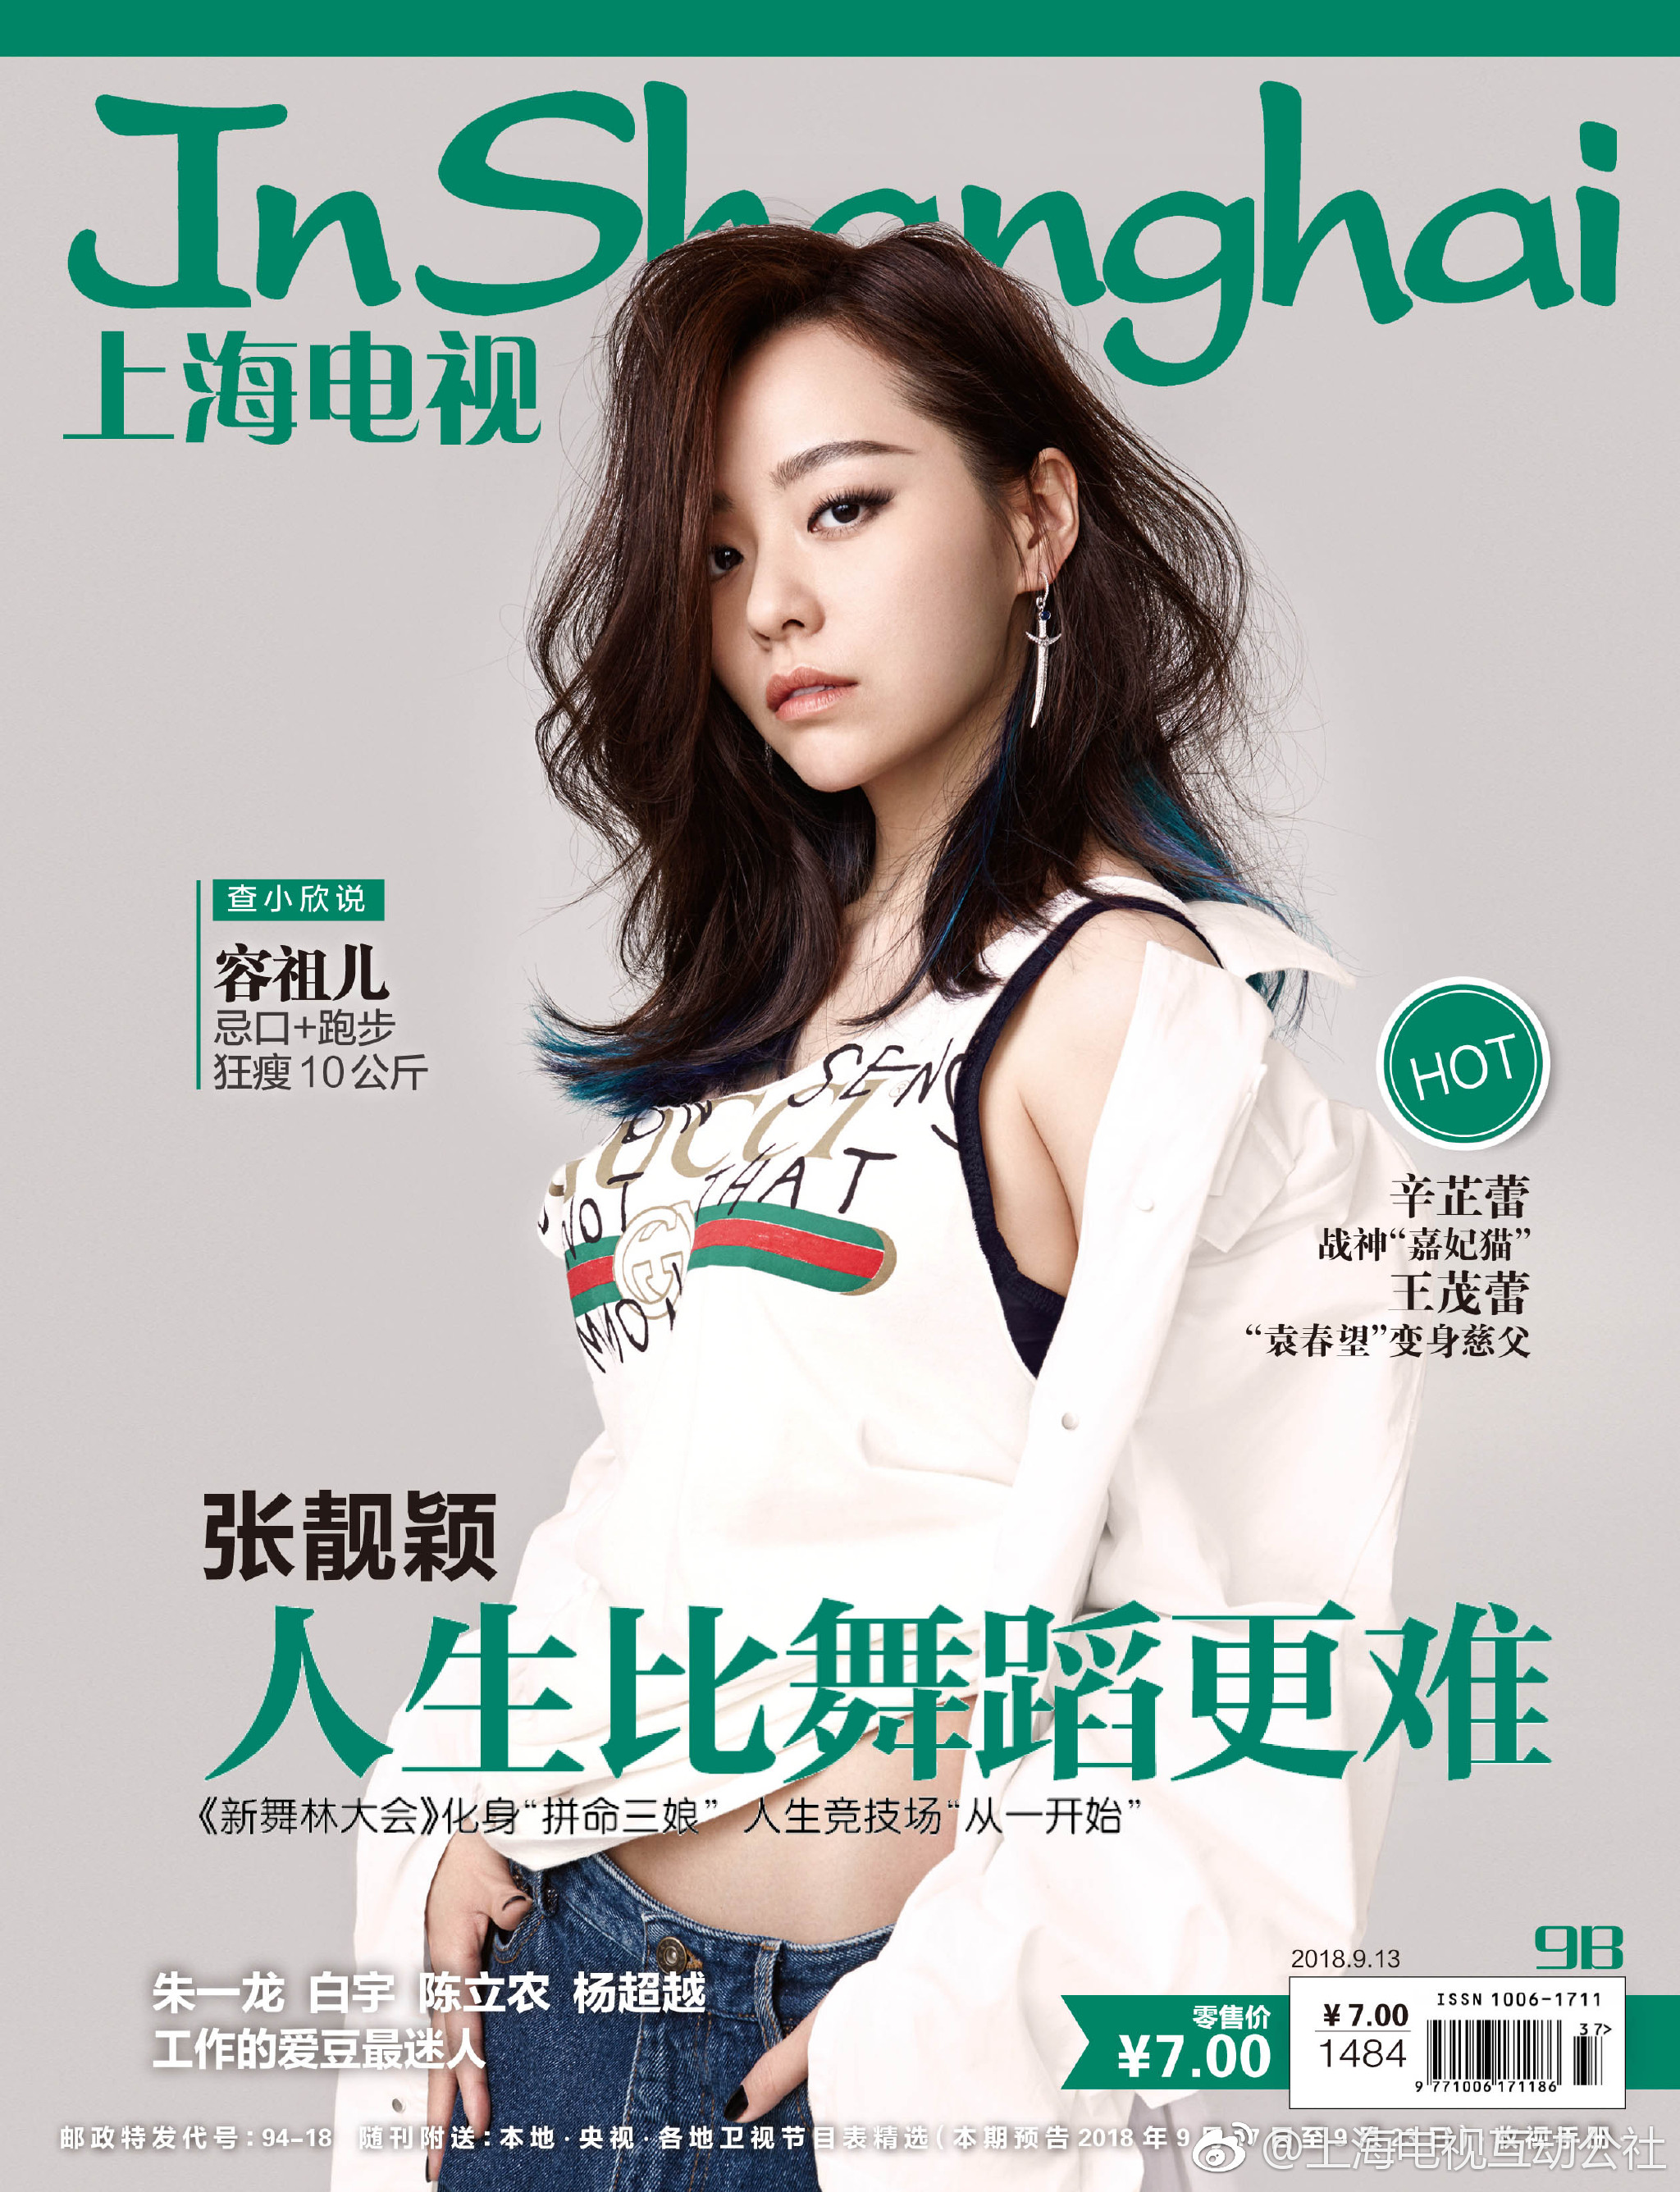 Jane Zhang on Shanghai TV weekly magazine cover